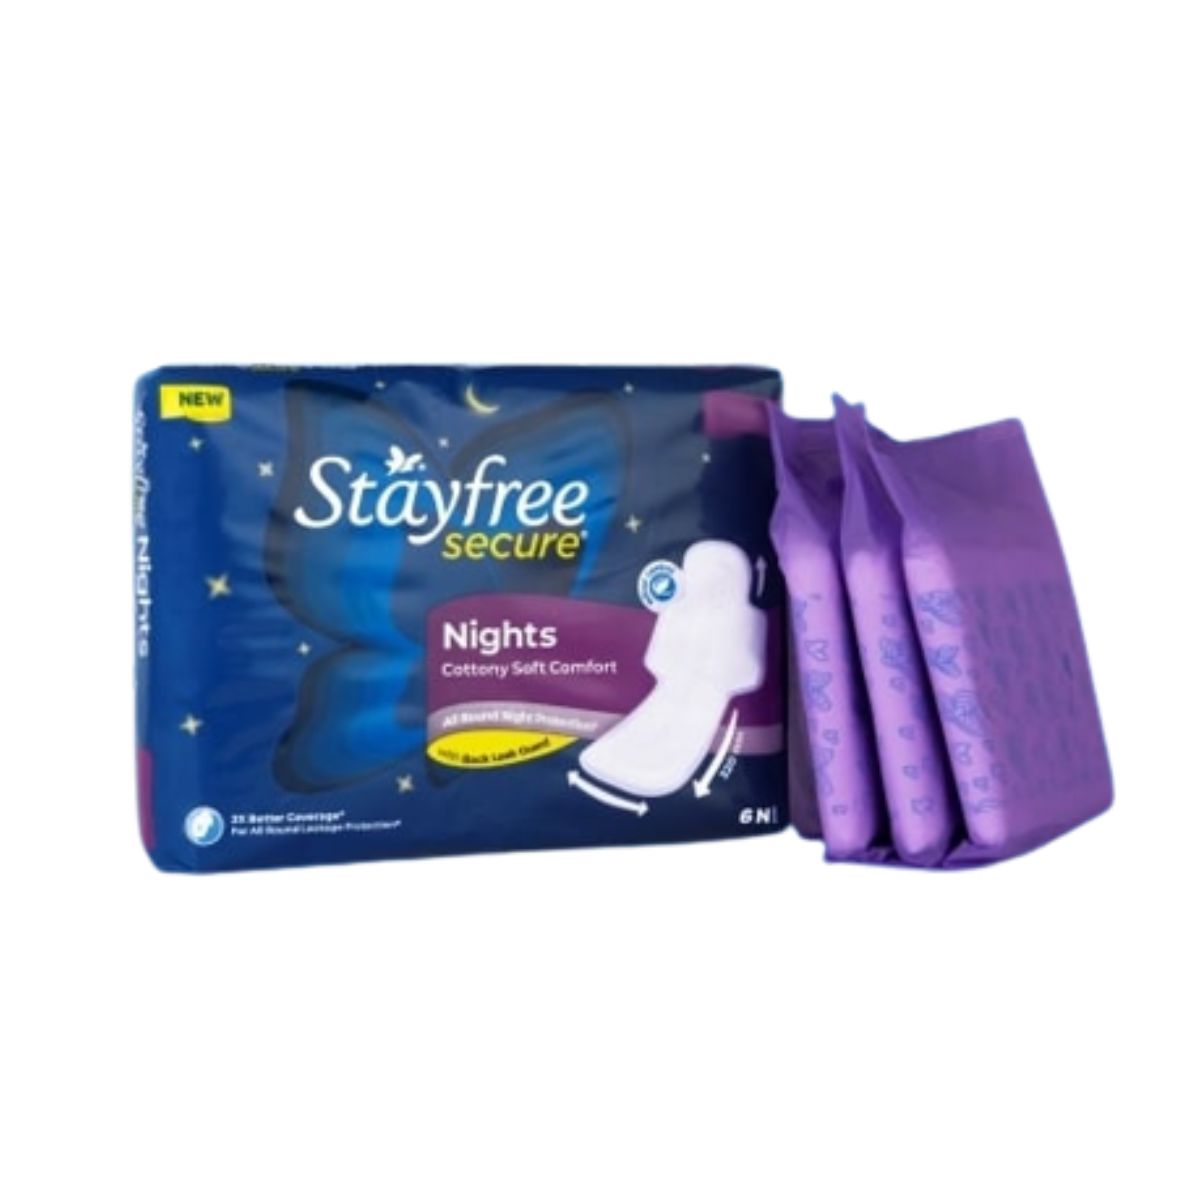 Stayfree Secure - Nights Cottony Soft Comfort - With back Leak Gaurd - 6N